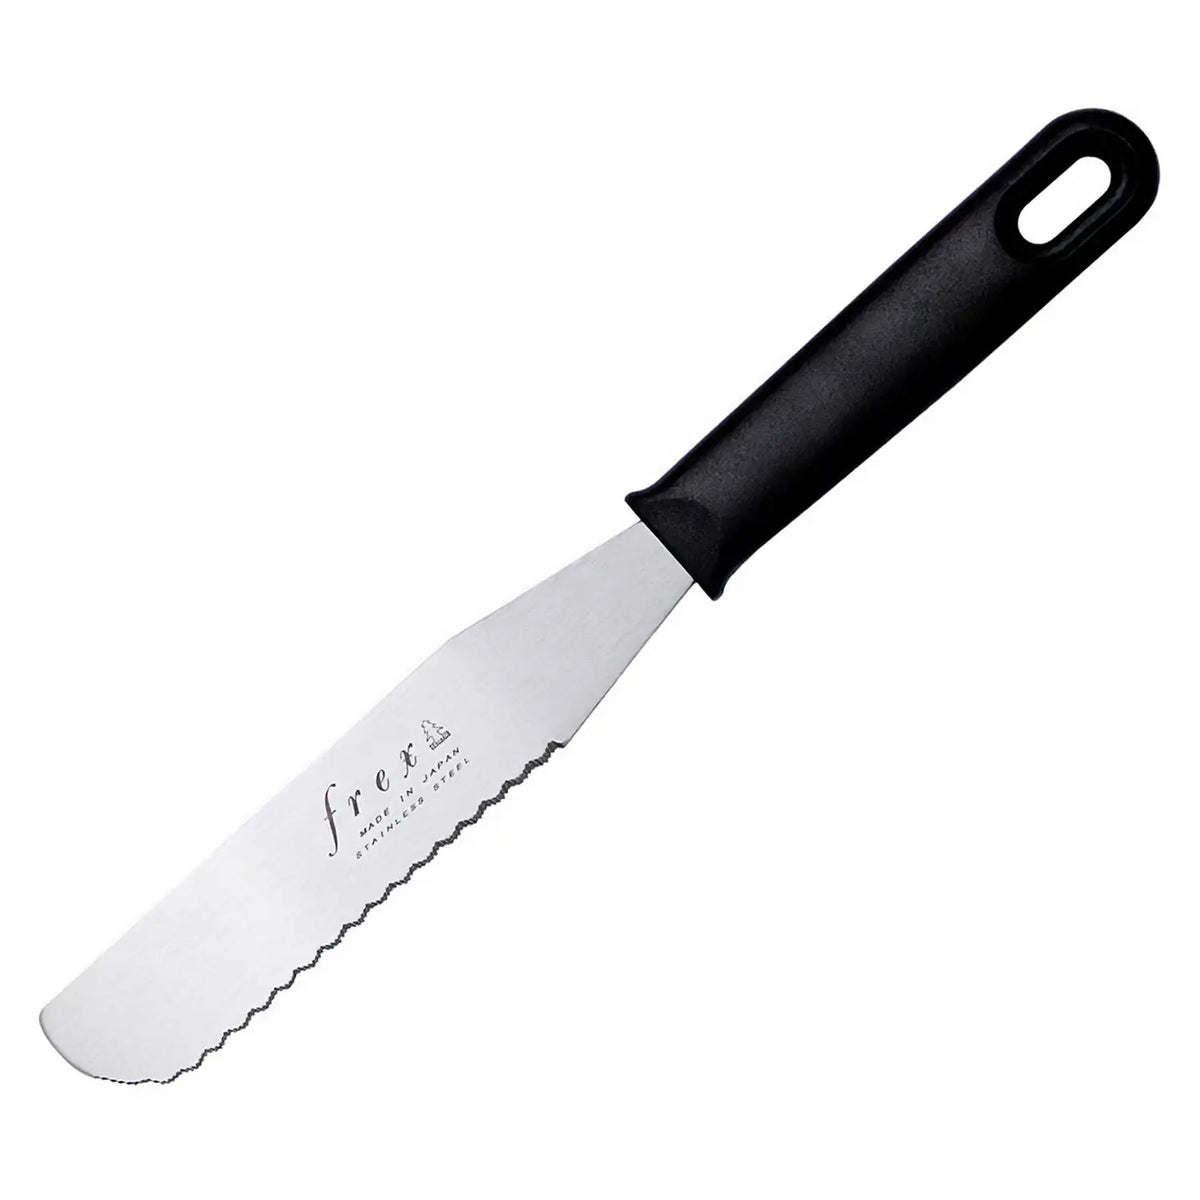 Kitasho frex Stainless Steel Pastry Knife